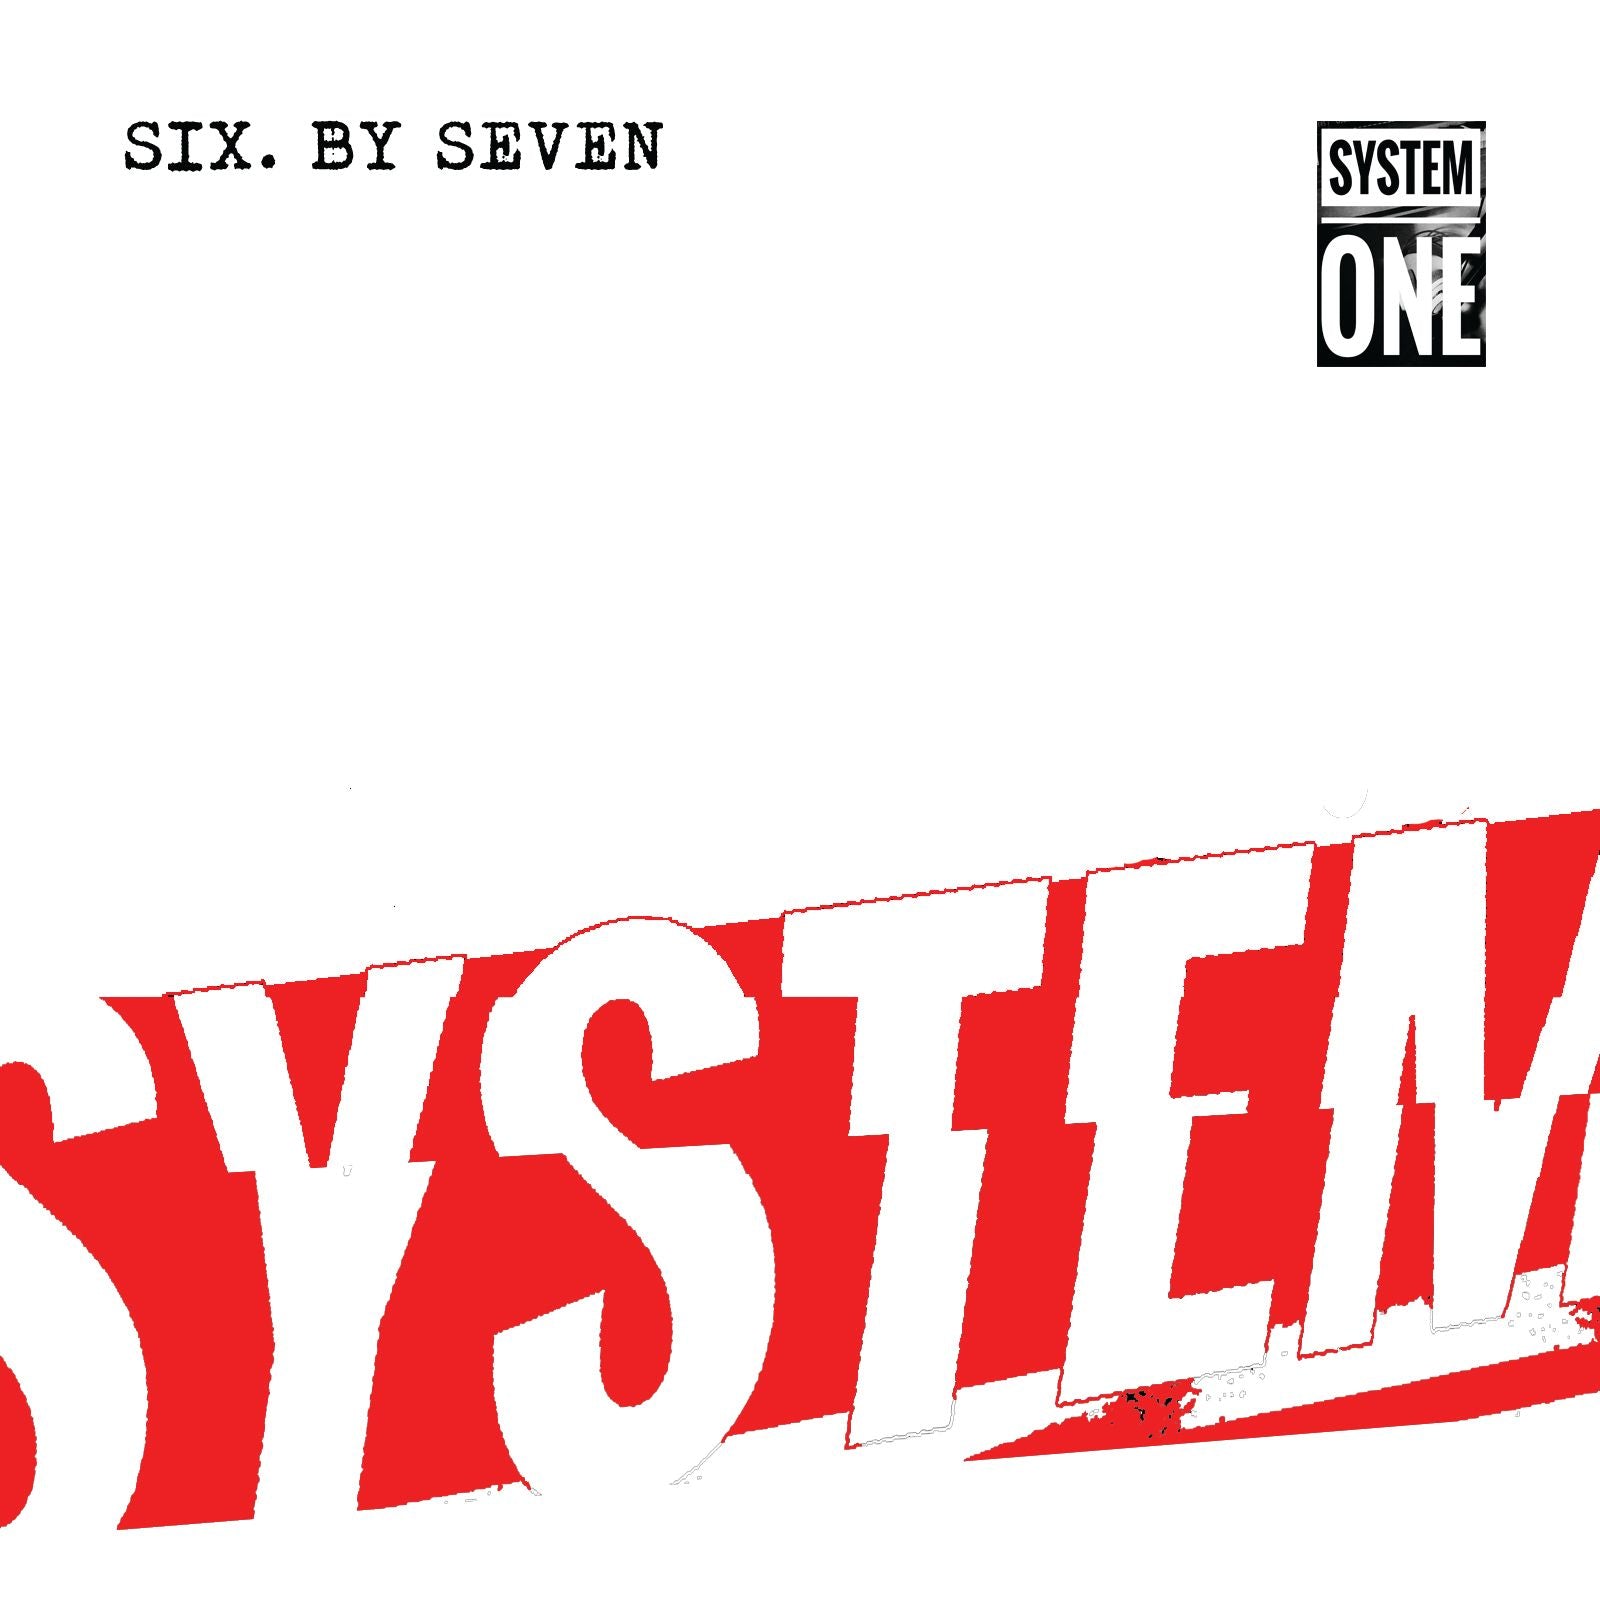 SIX BY SEVEN - System One - 2LP - Neon Magenta/Orange Vinyl [RSD23]